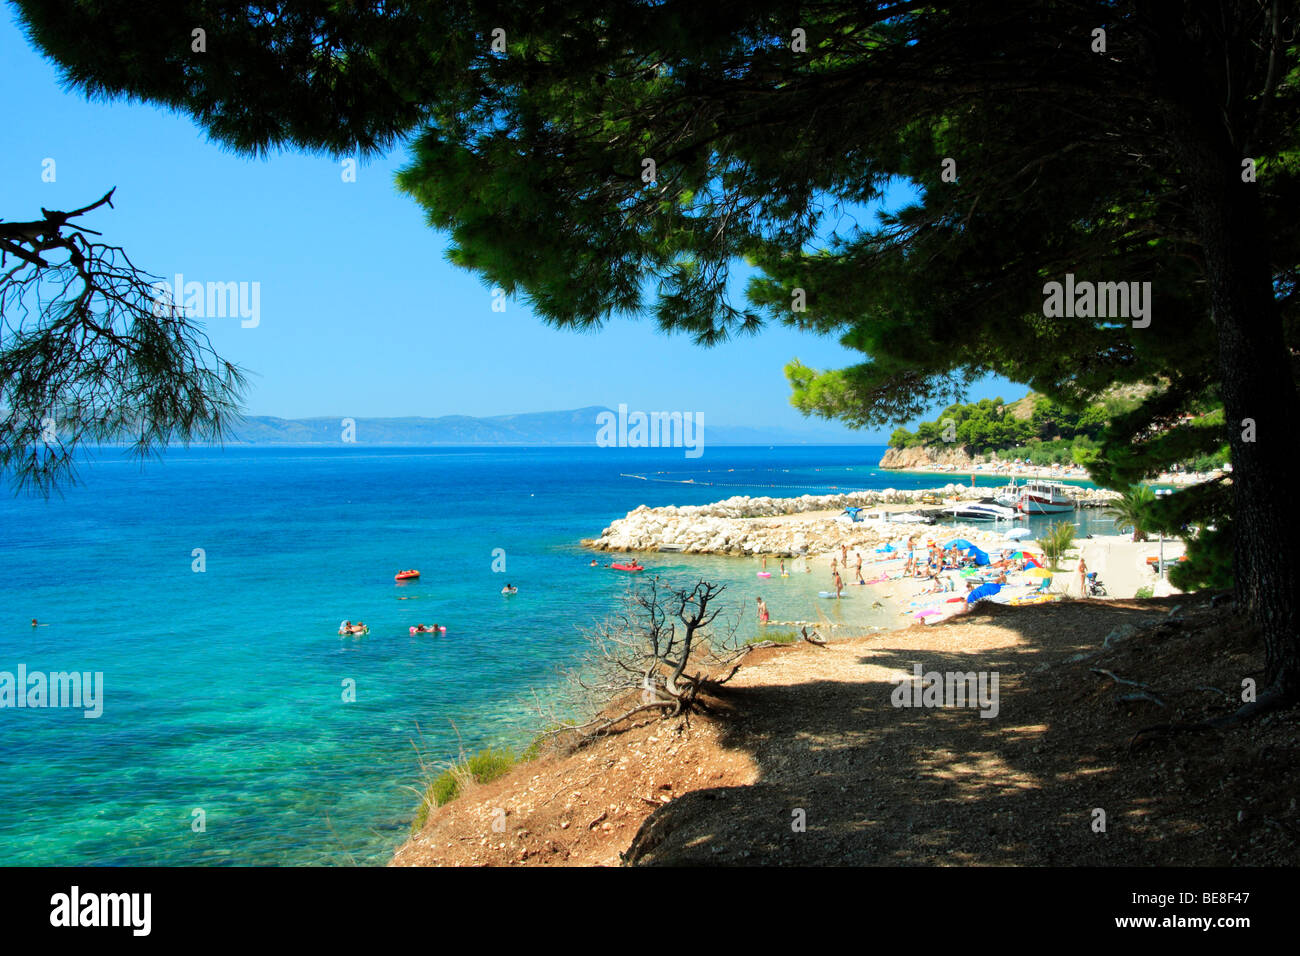 Tourists enjoying their time at a beach in Zivogosce village, Croatia Stock Photo